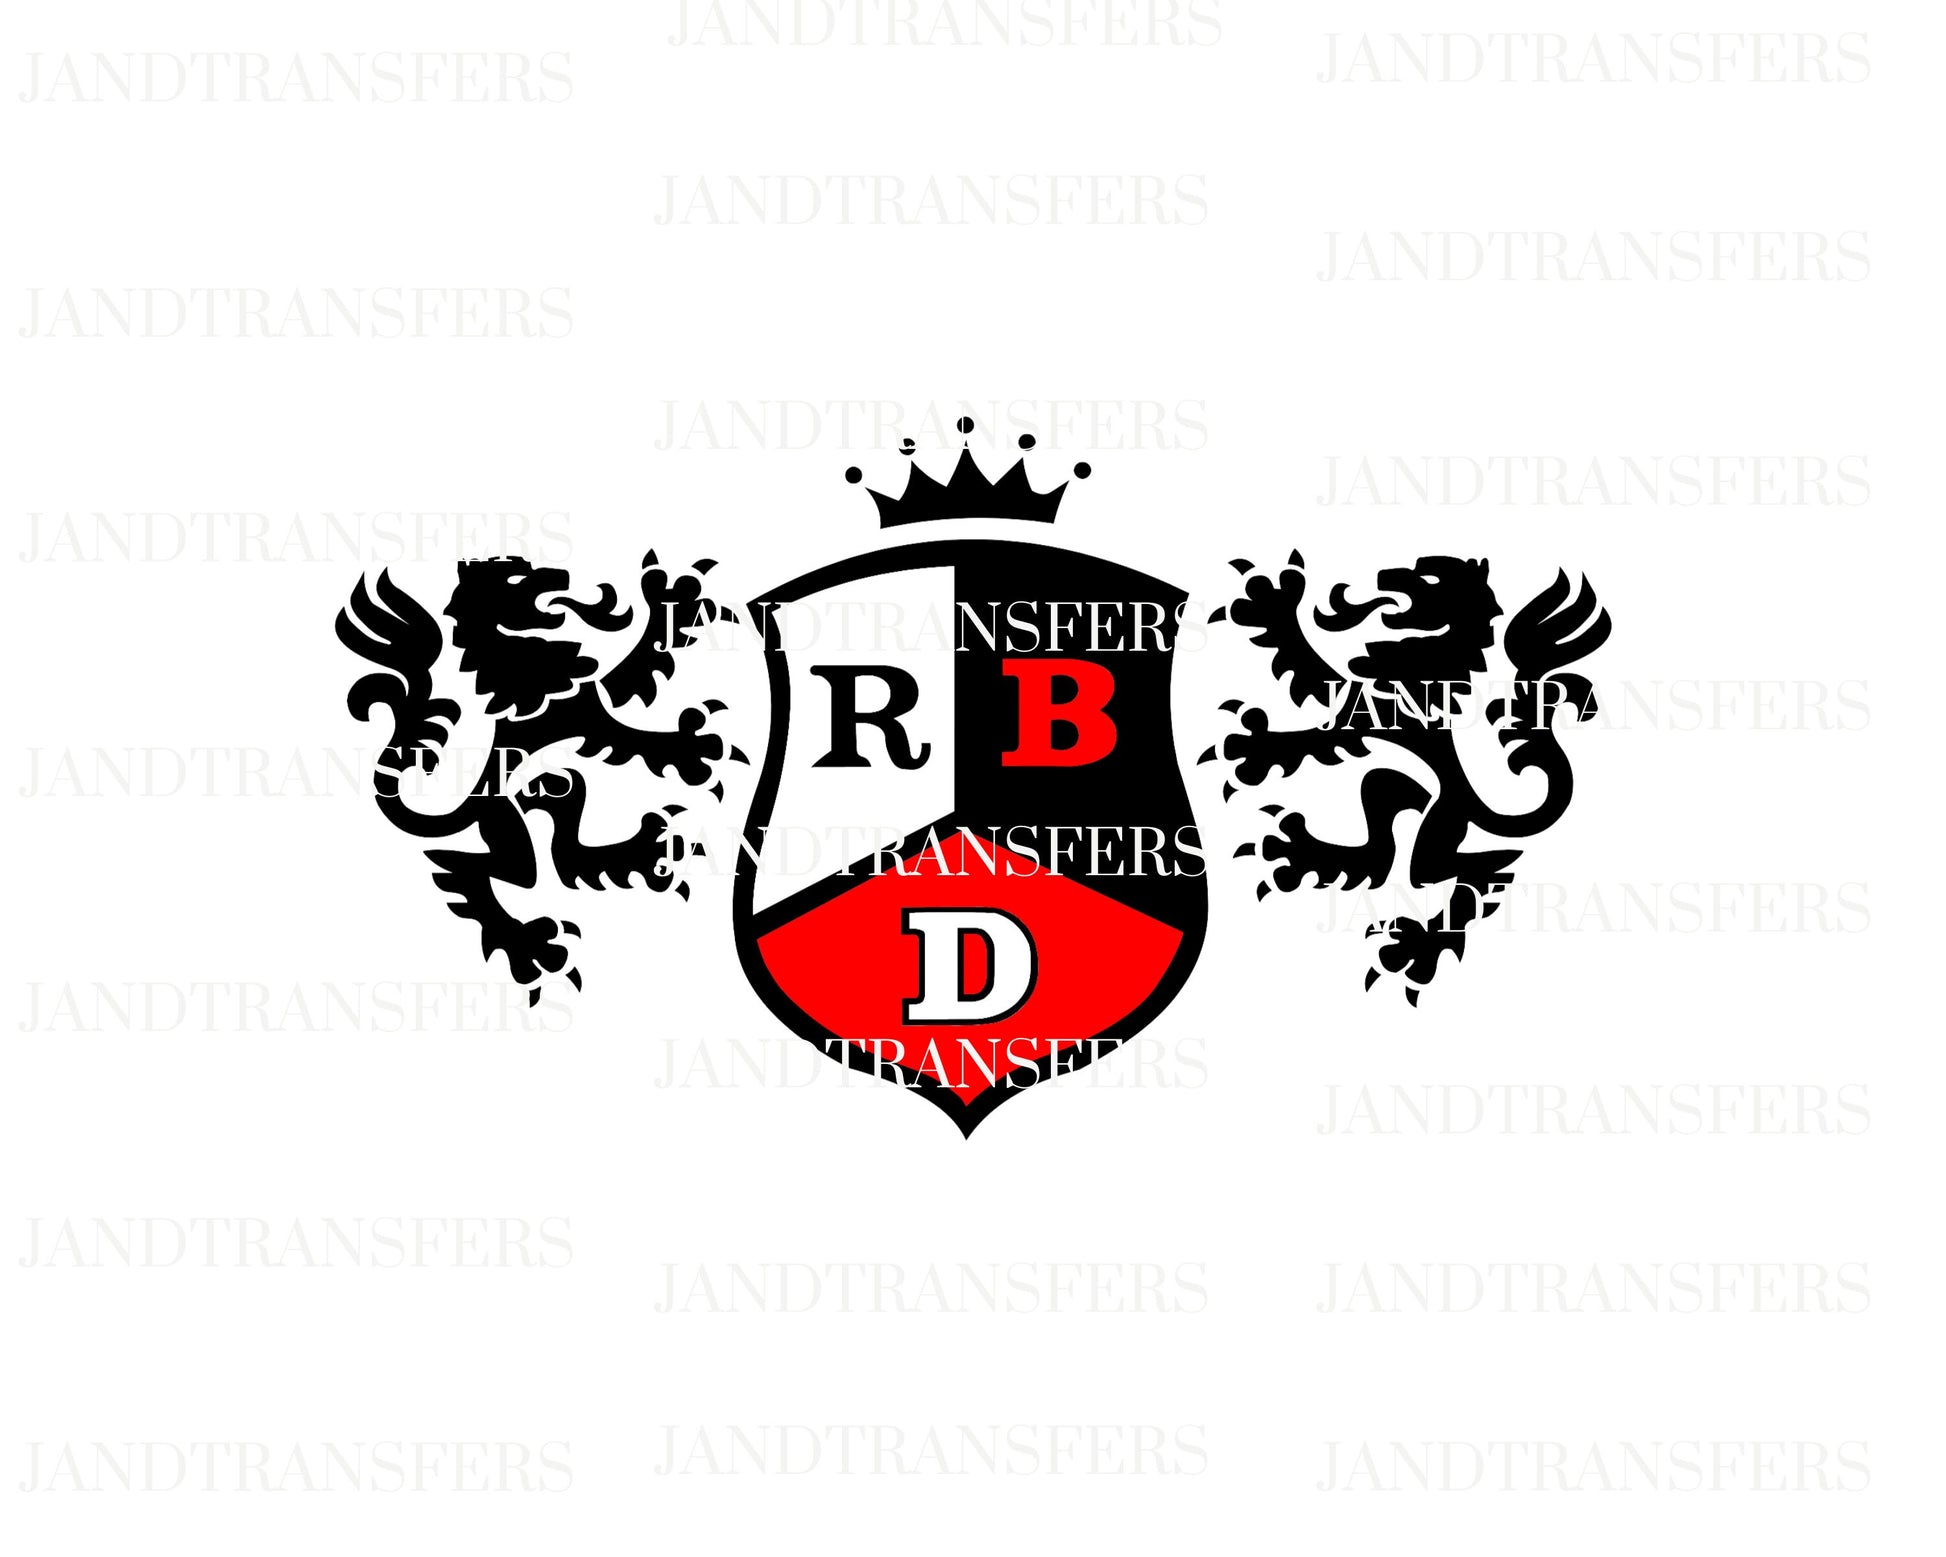 DTF Transfers Ready To Press